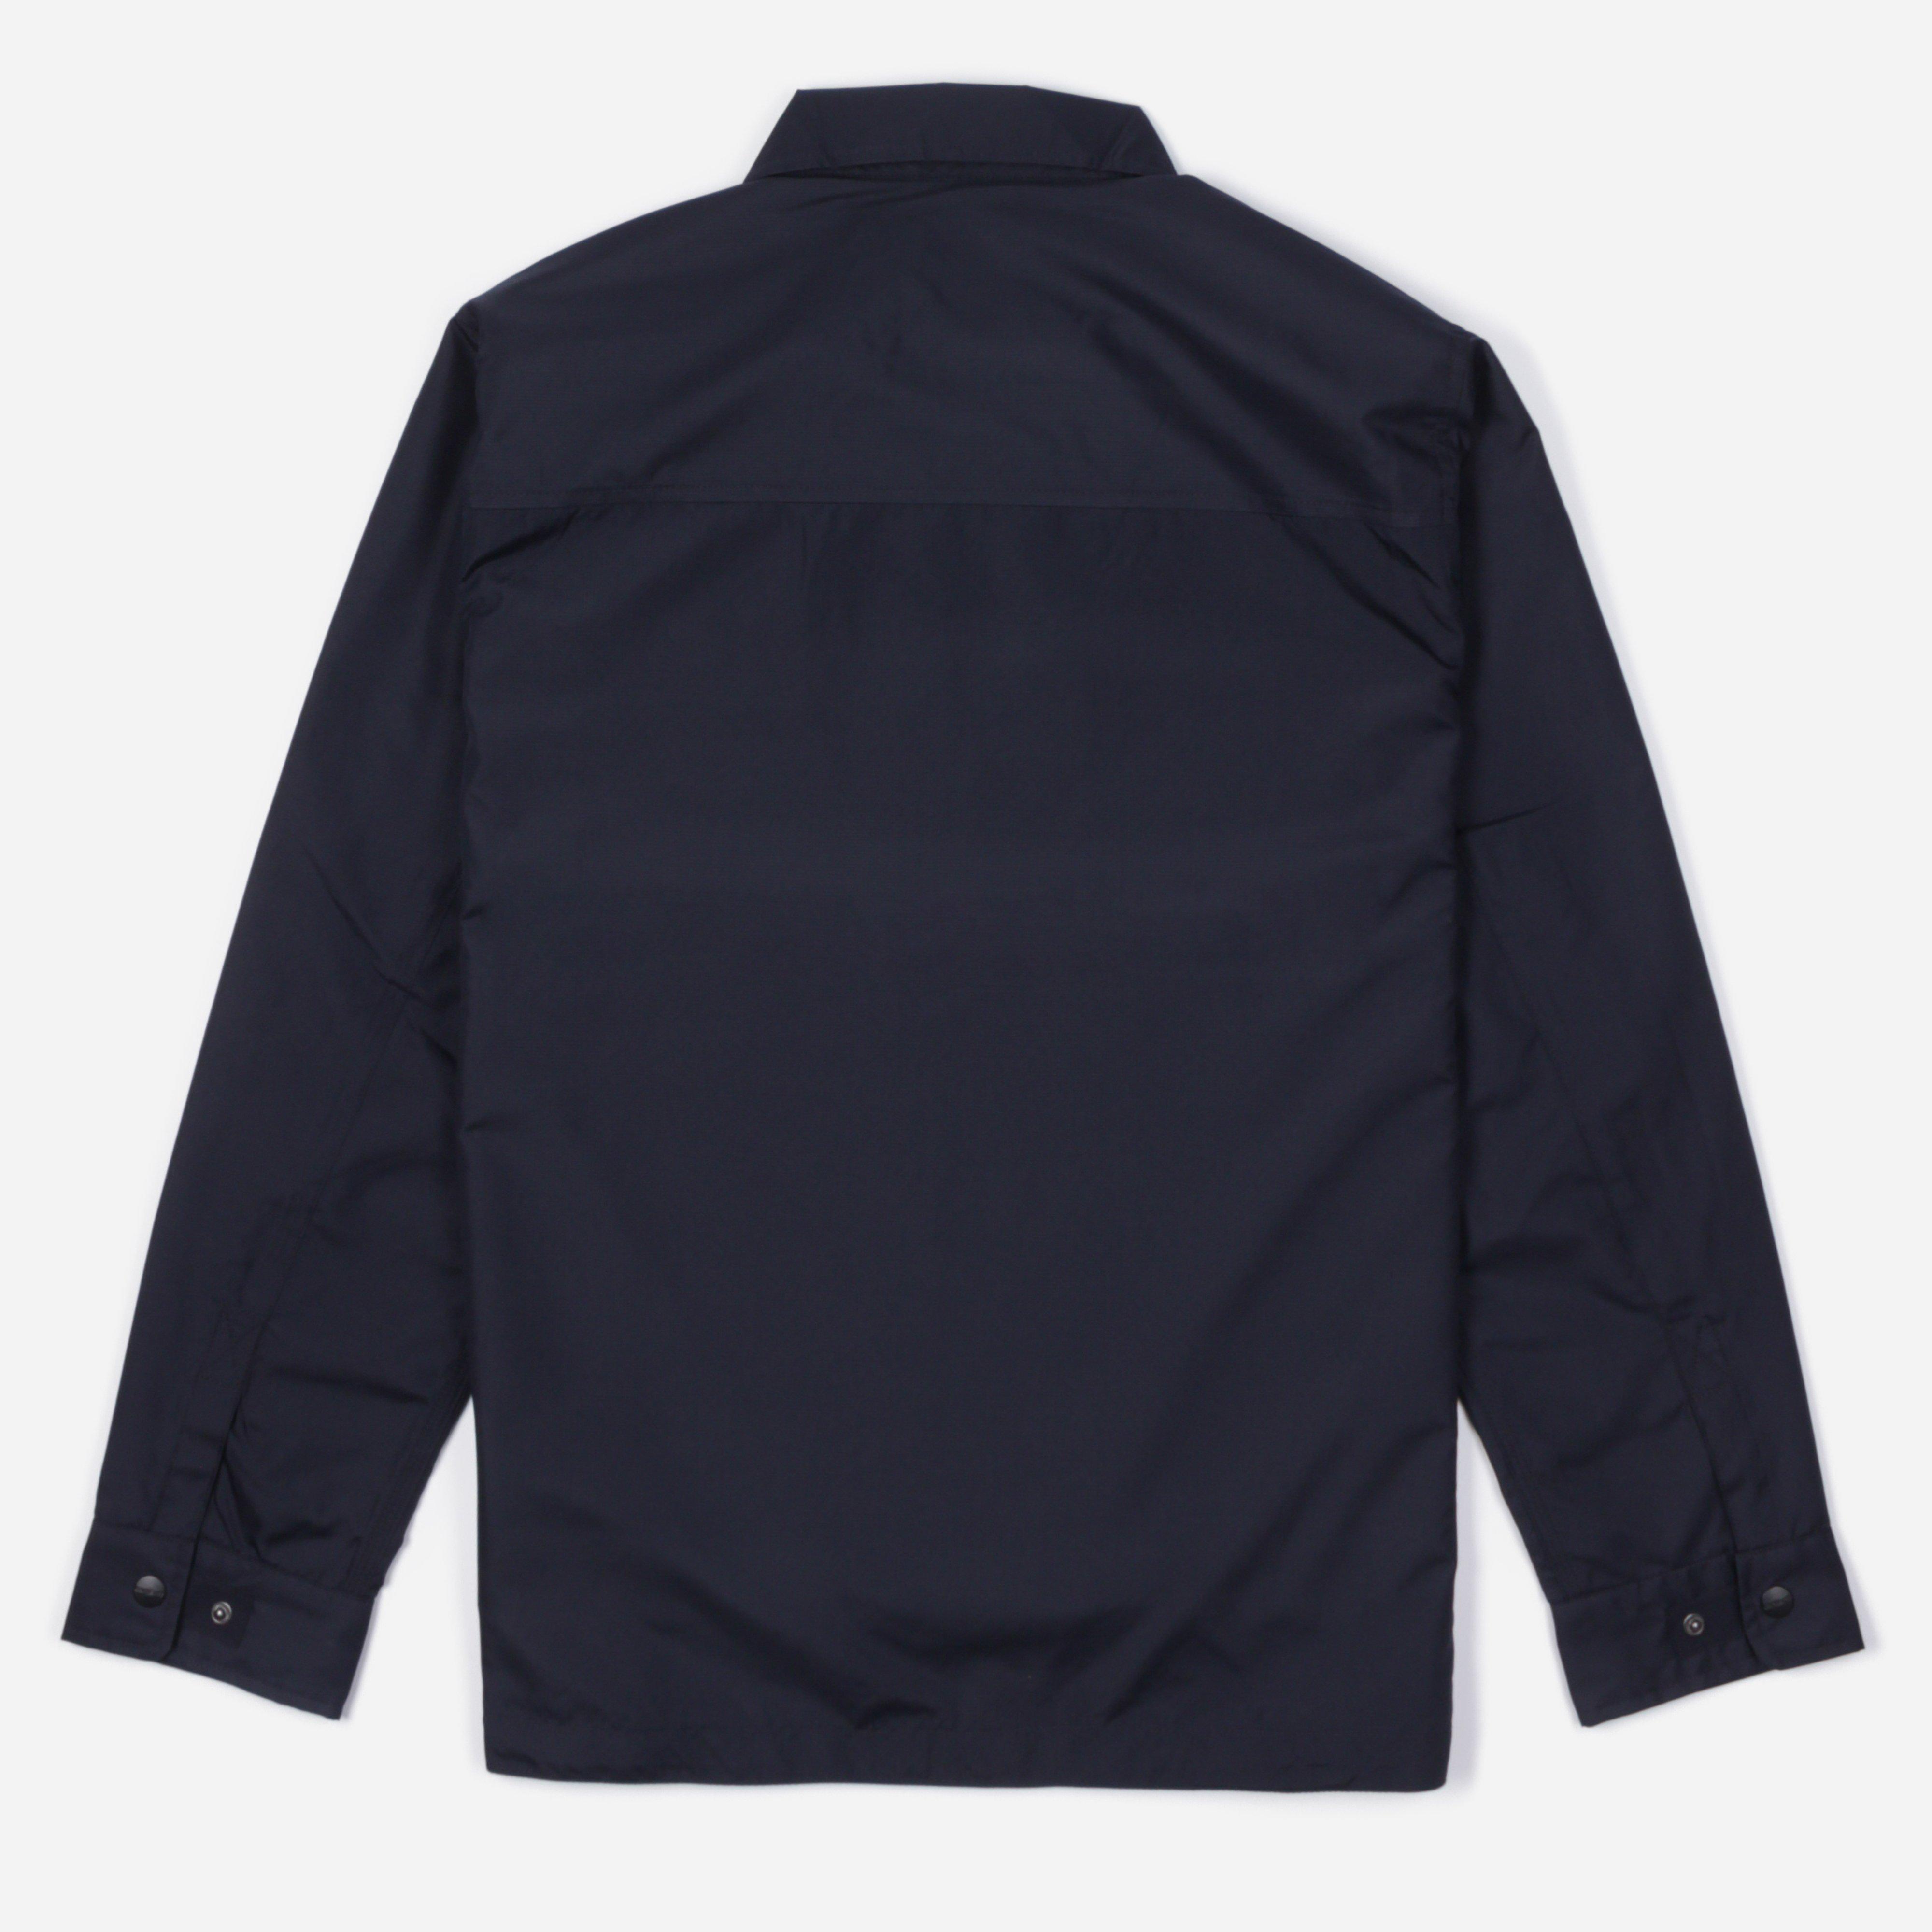 Carhartt WIP Fargo Shirt Jacket in Navy (Blue) for Men - Lyst